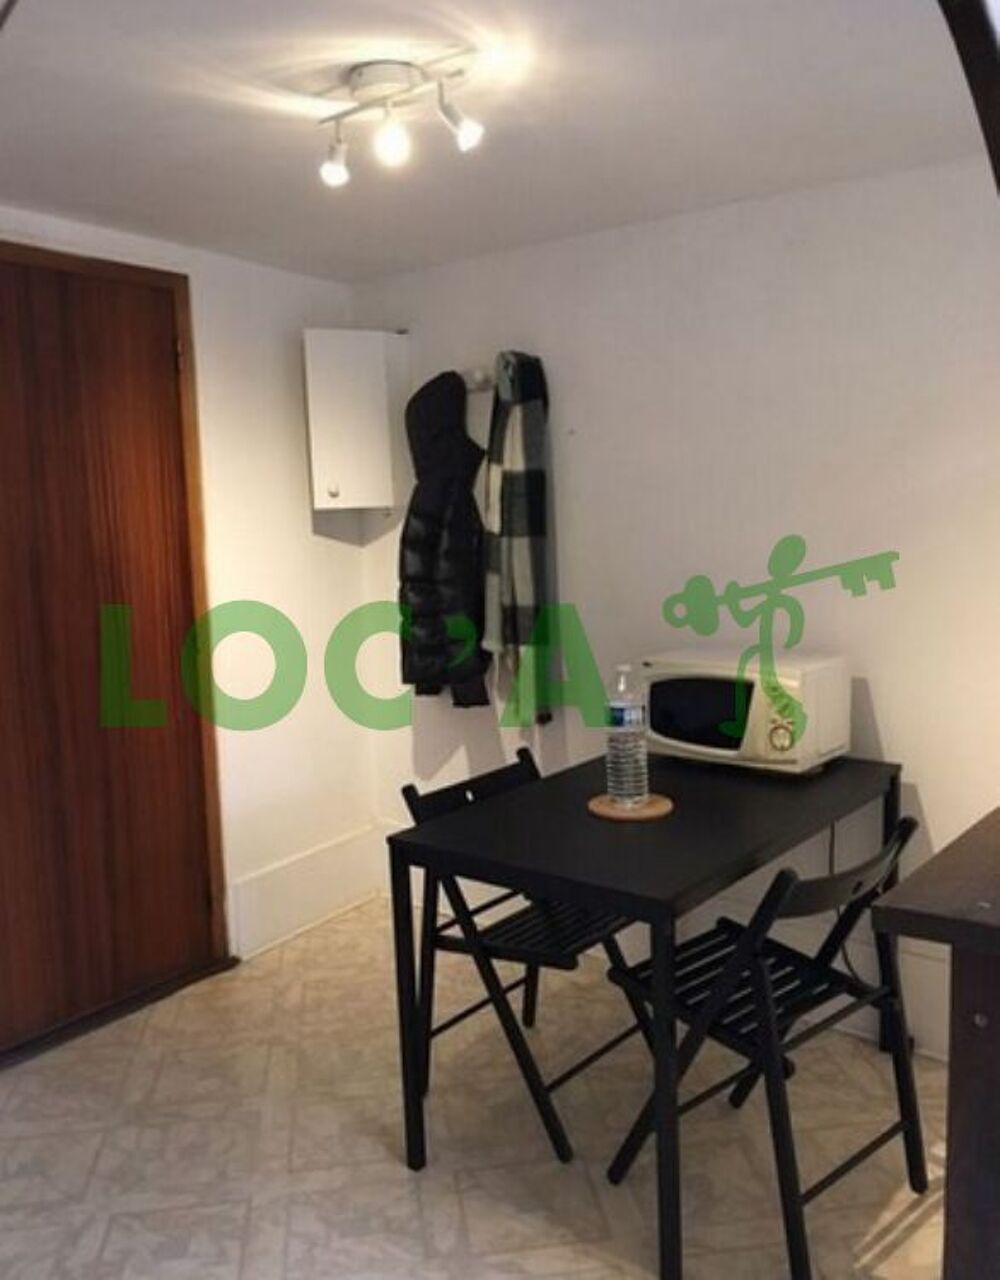 location Appartement - 1 pice(s) - 23 m Dijon (21000)